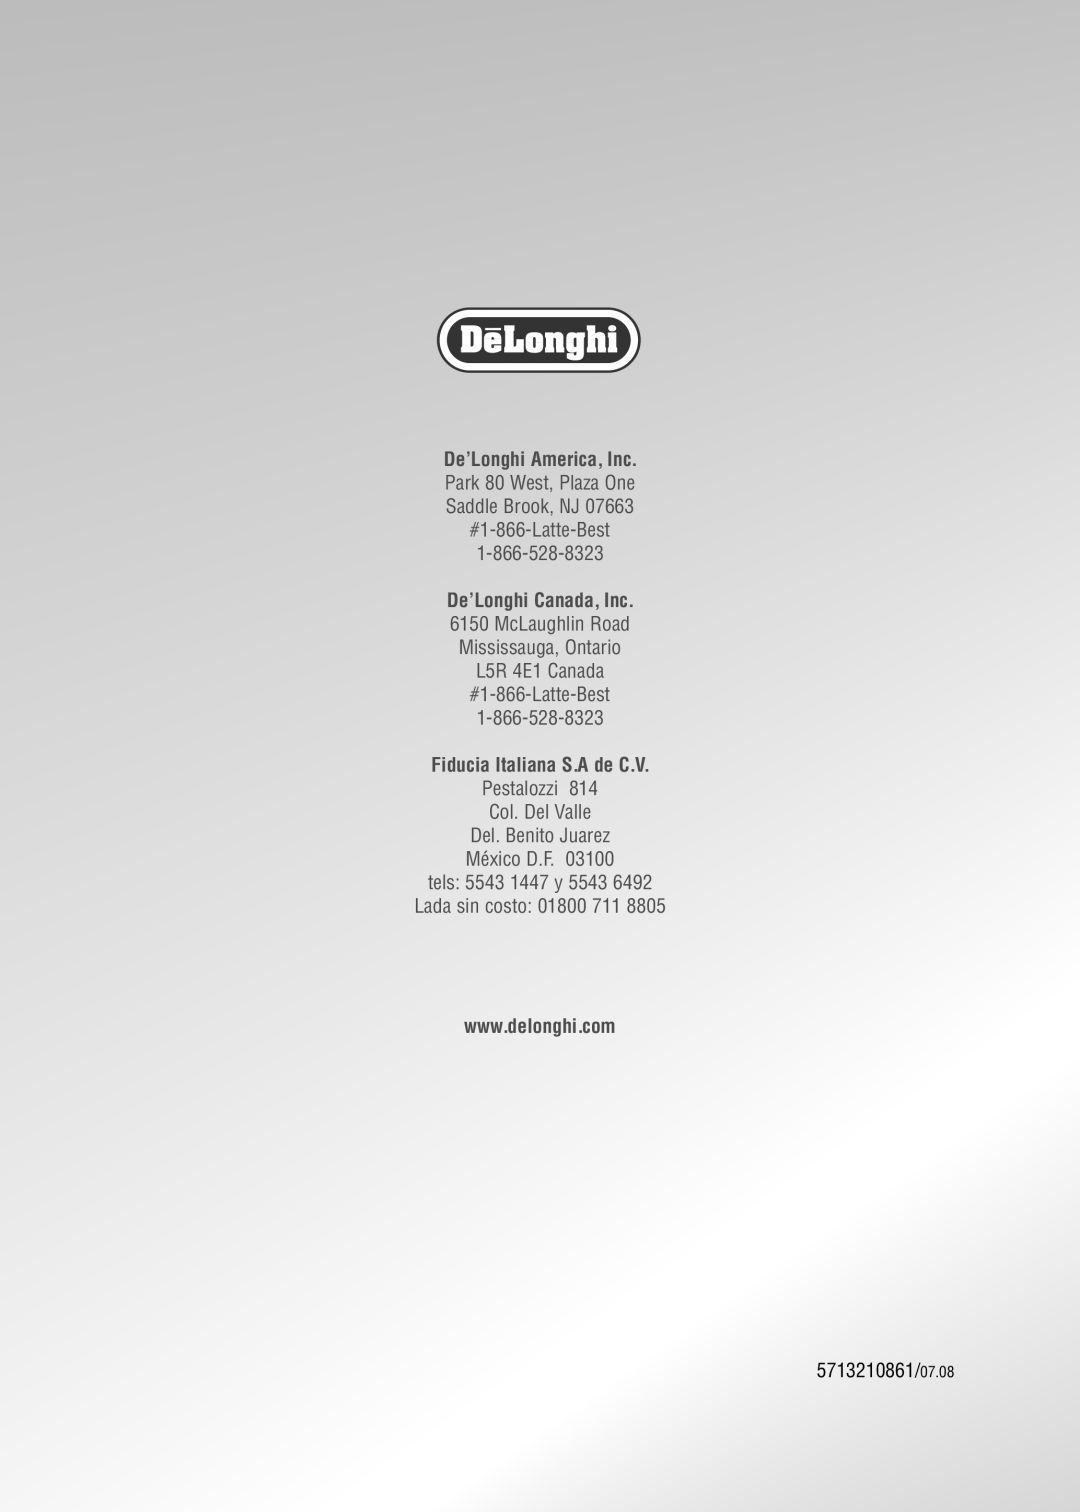 DeLonghi 5500 manual De’Longhi America, Inc, Park 80 West, Plaza One Saddle Brook, NJ #1-866-Latte-Best 